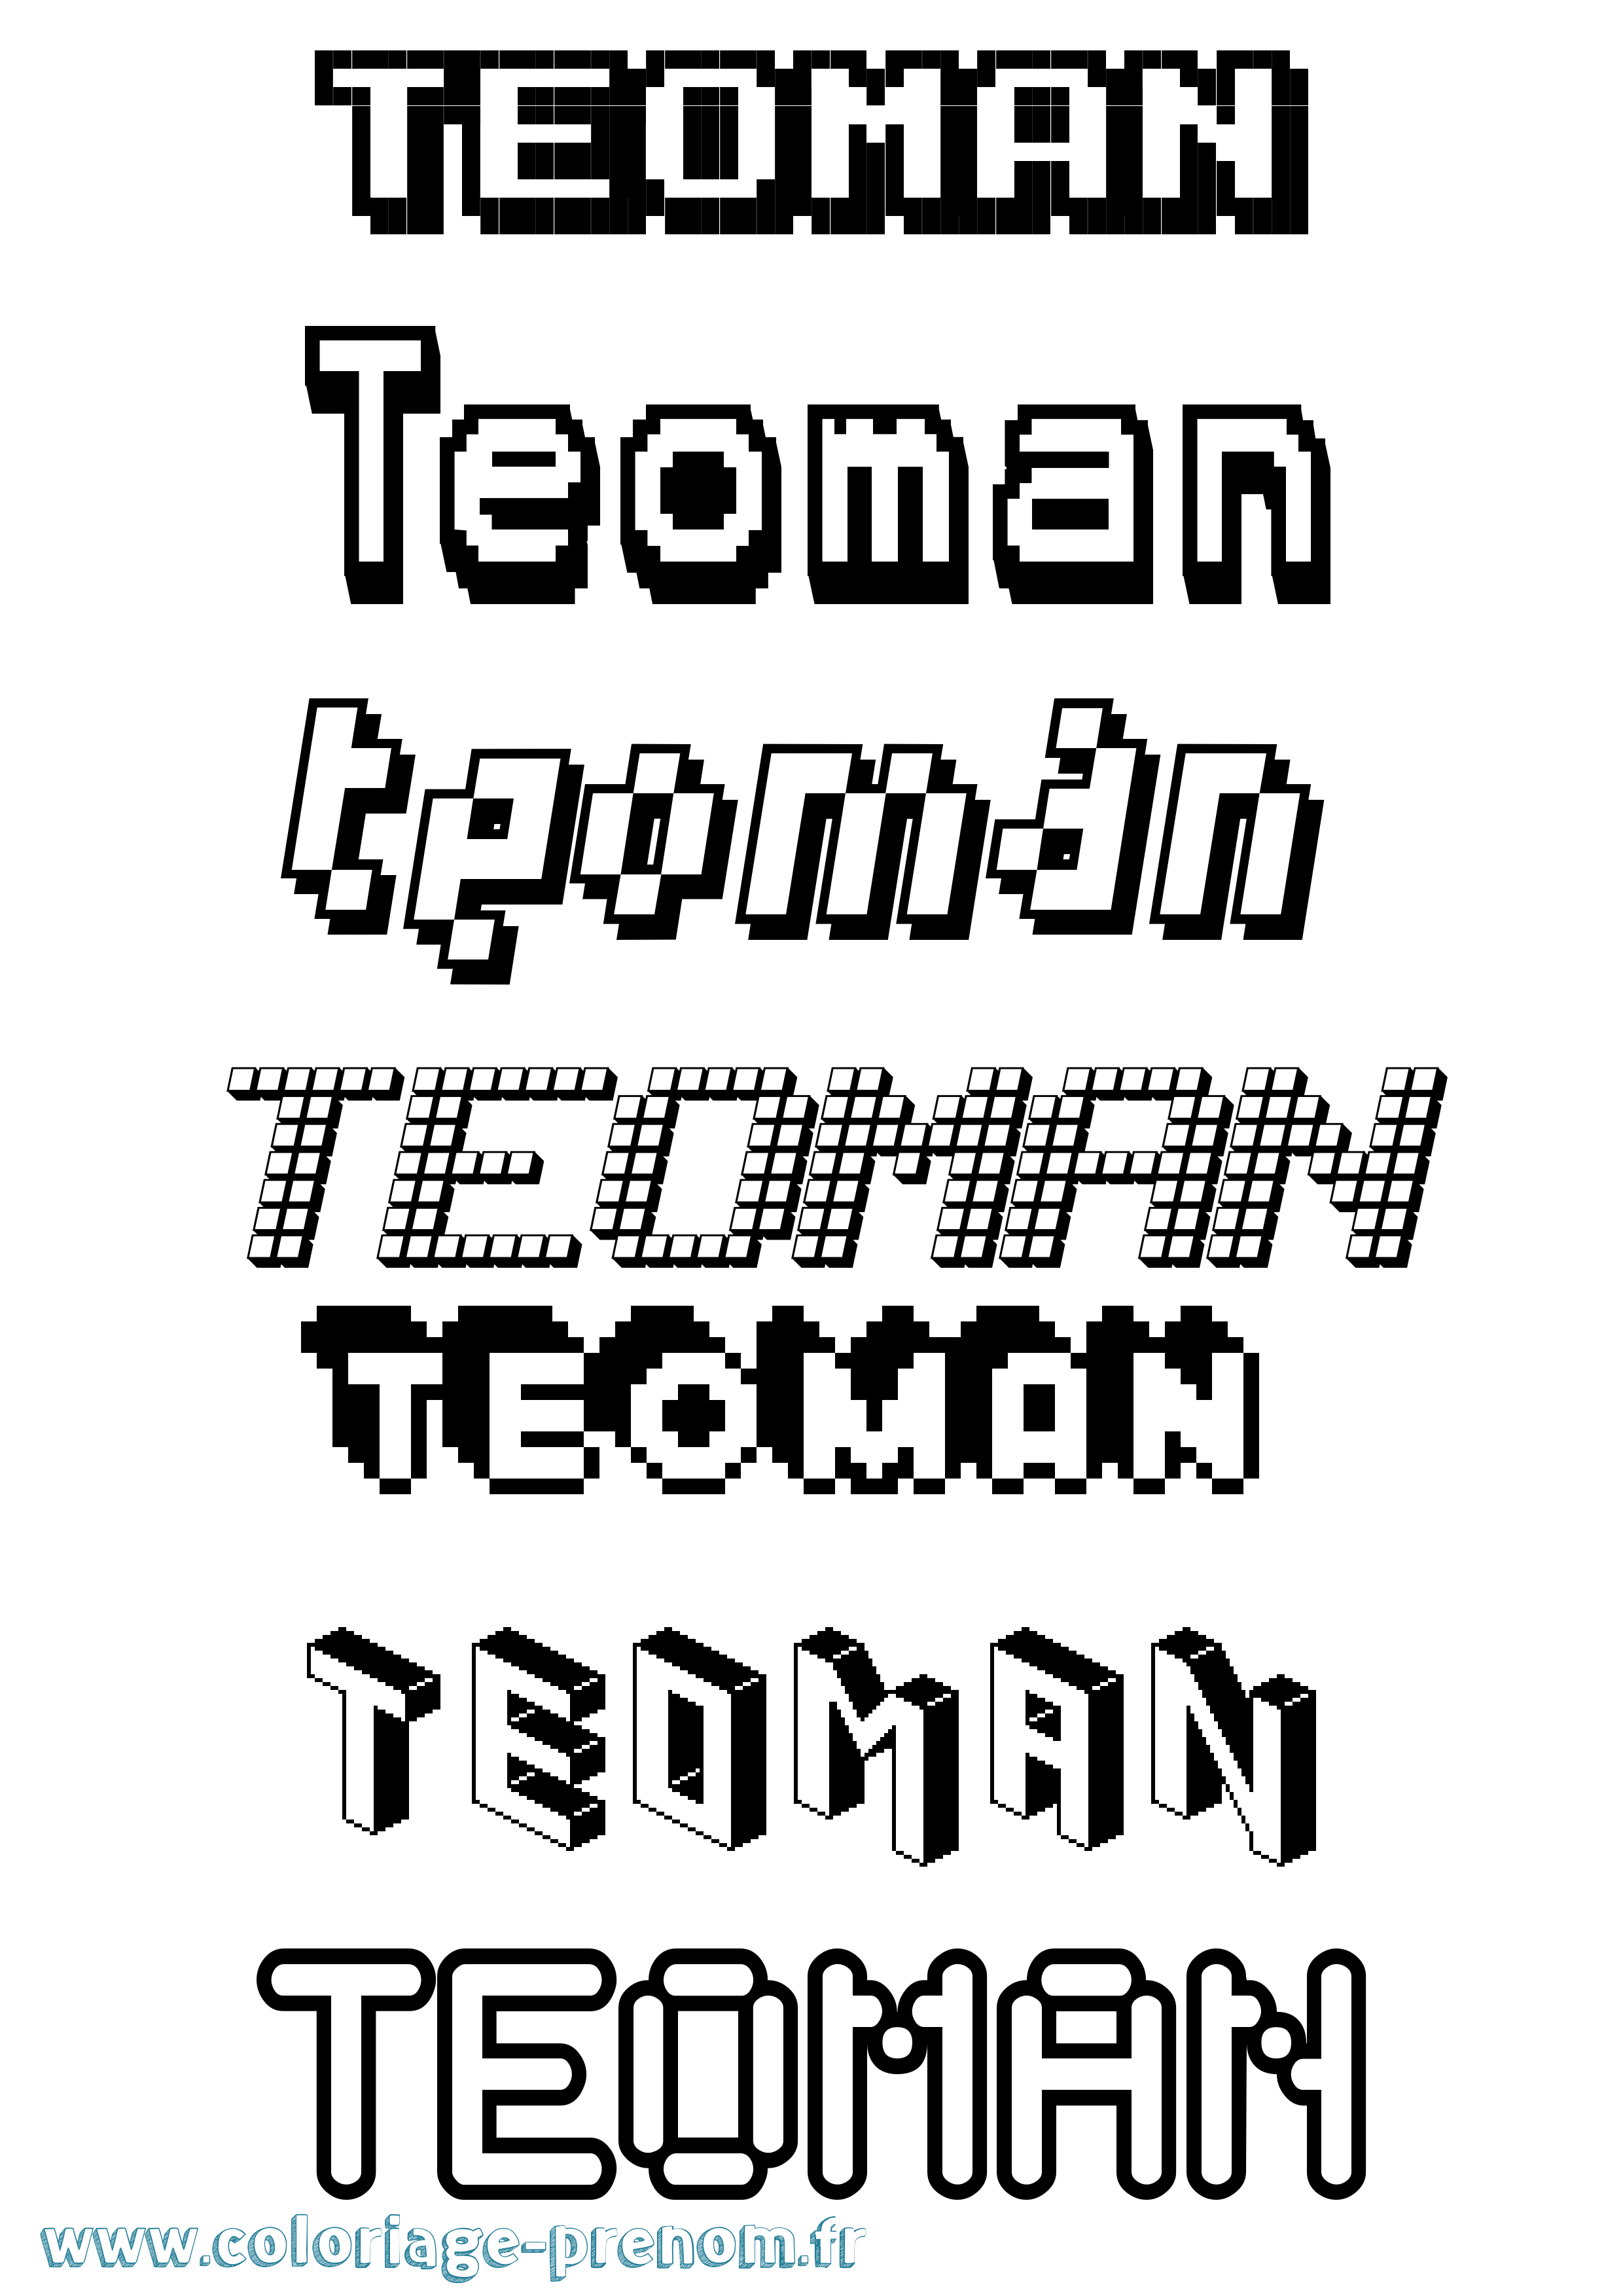 Coloriage prénom Teoman Pixel